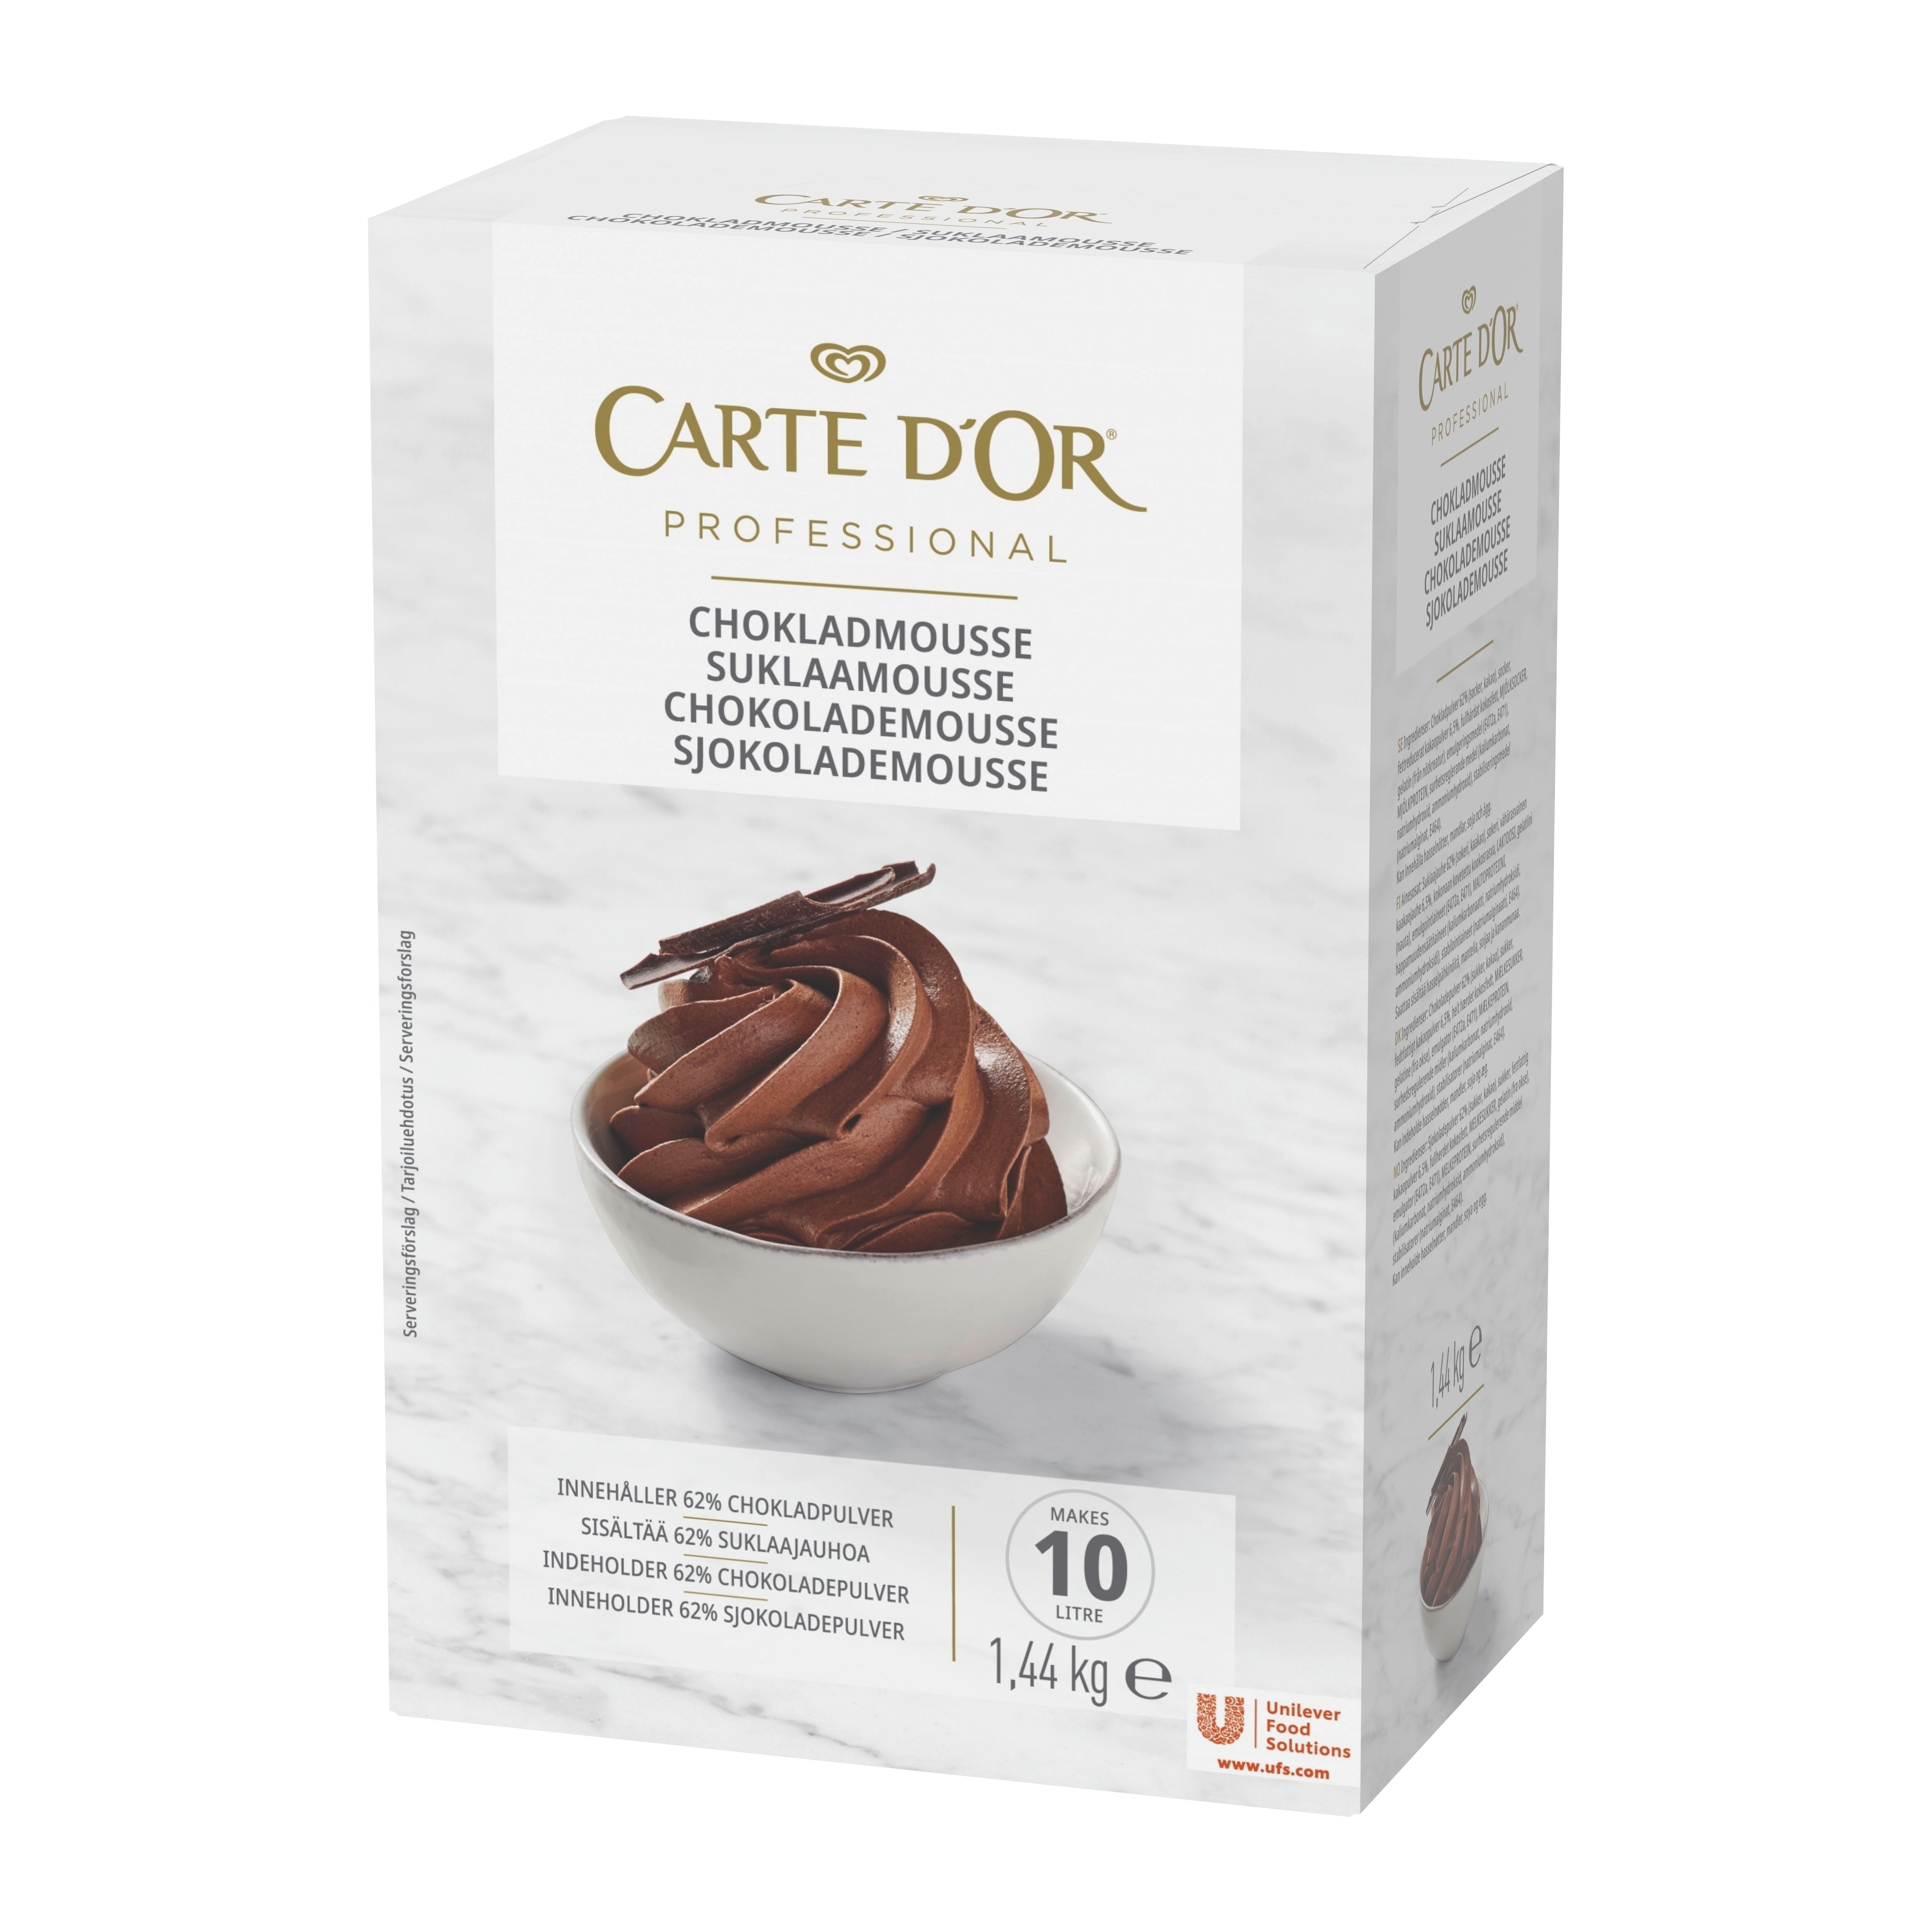 CARTE D'OR Chokladmousse 1 x 1,44 kg